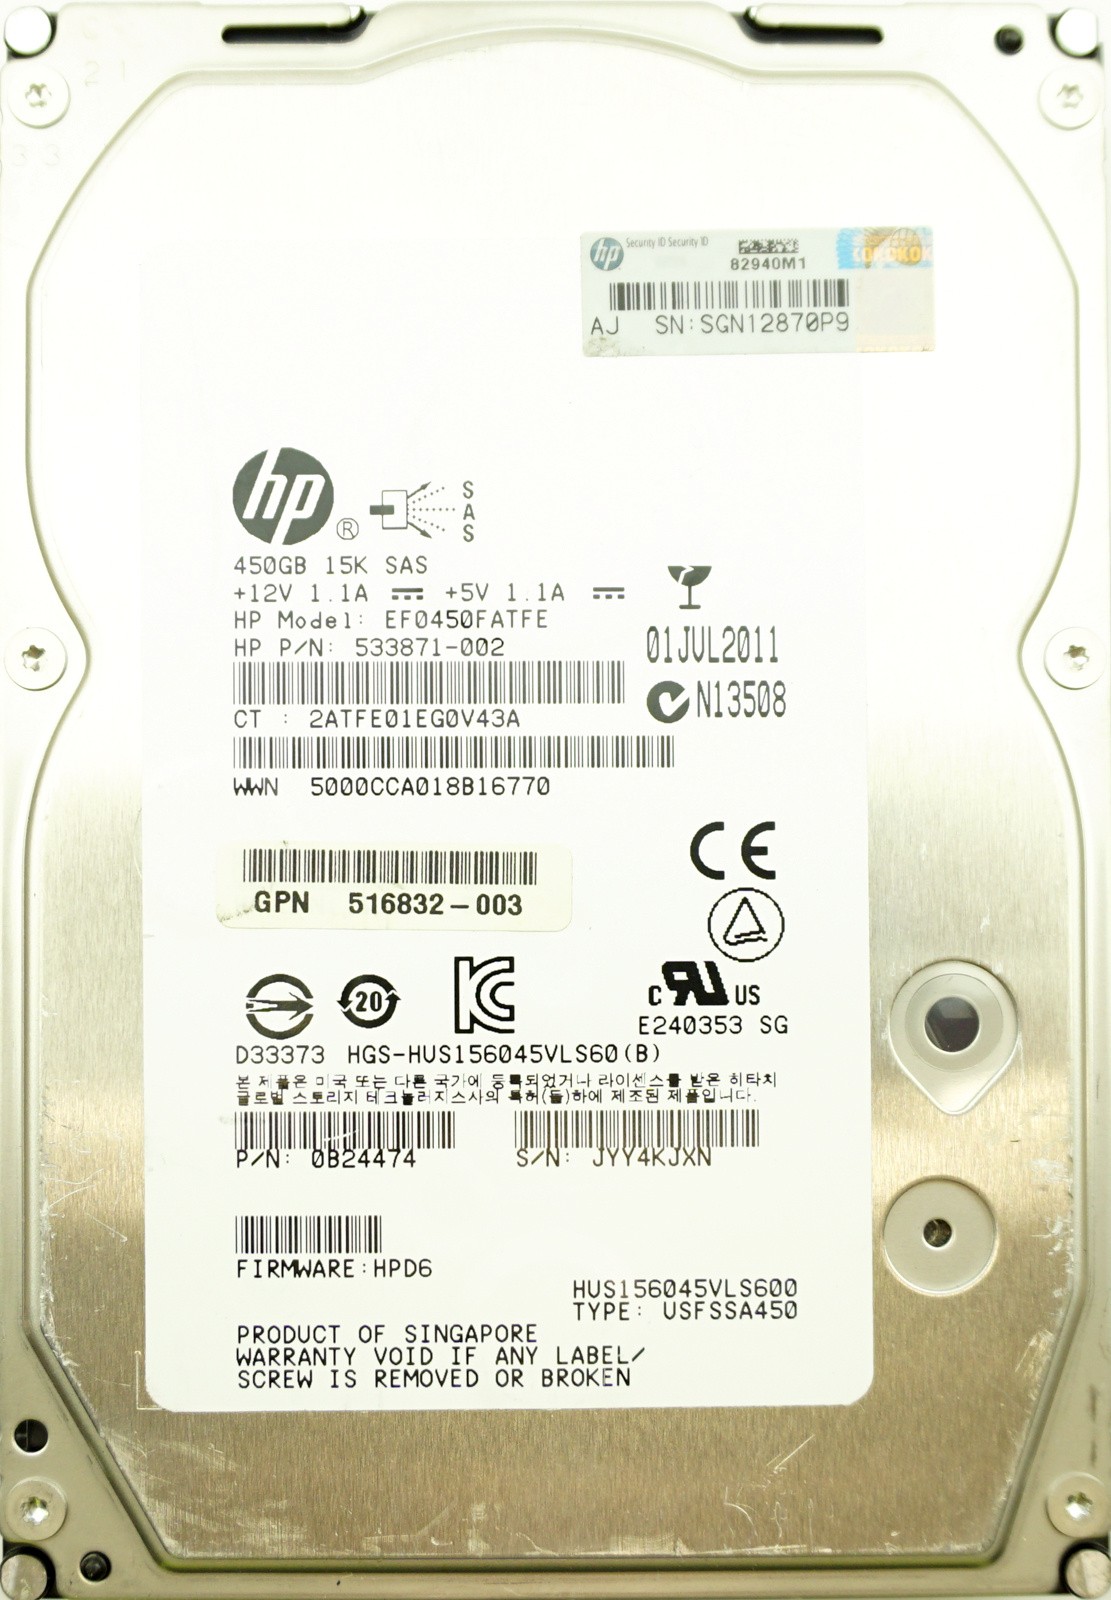 HP (533871-002) 450GB SAS-2 (LFF) 6Gb/s 15K HDD